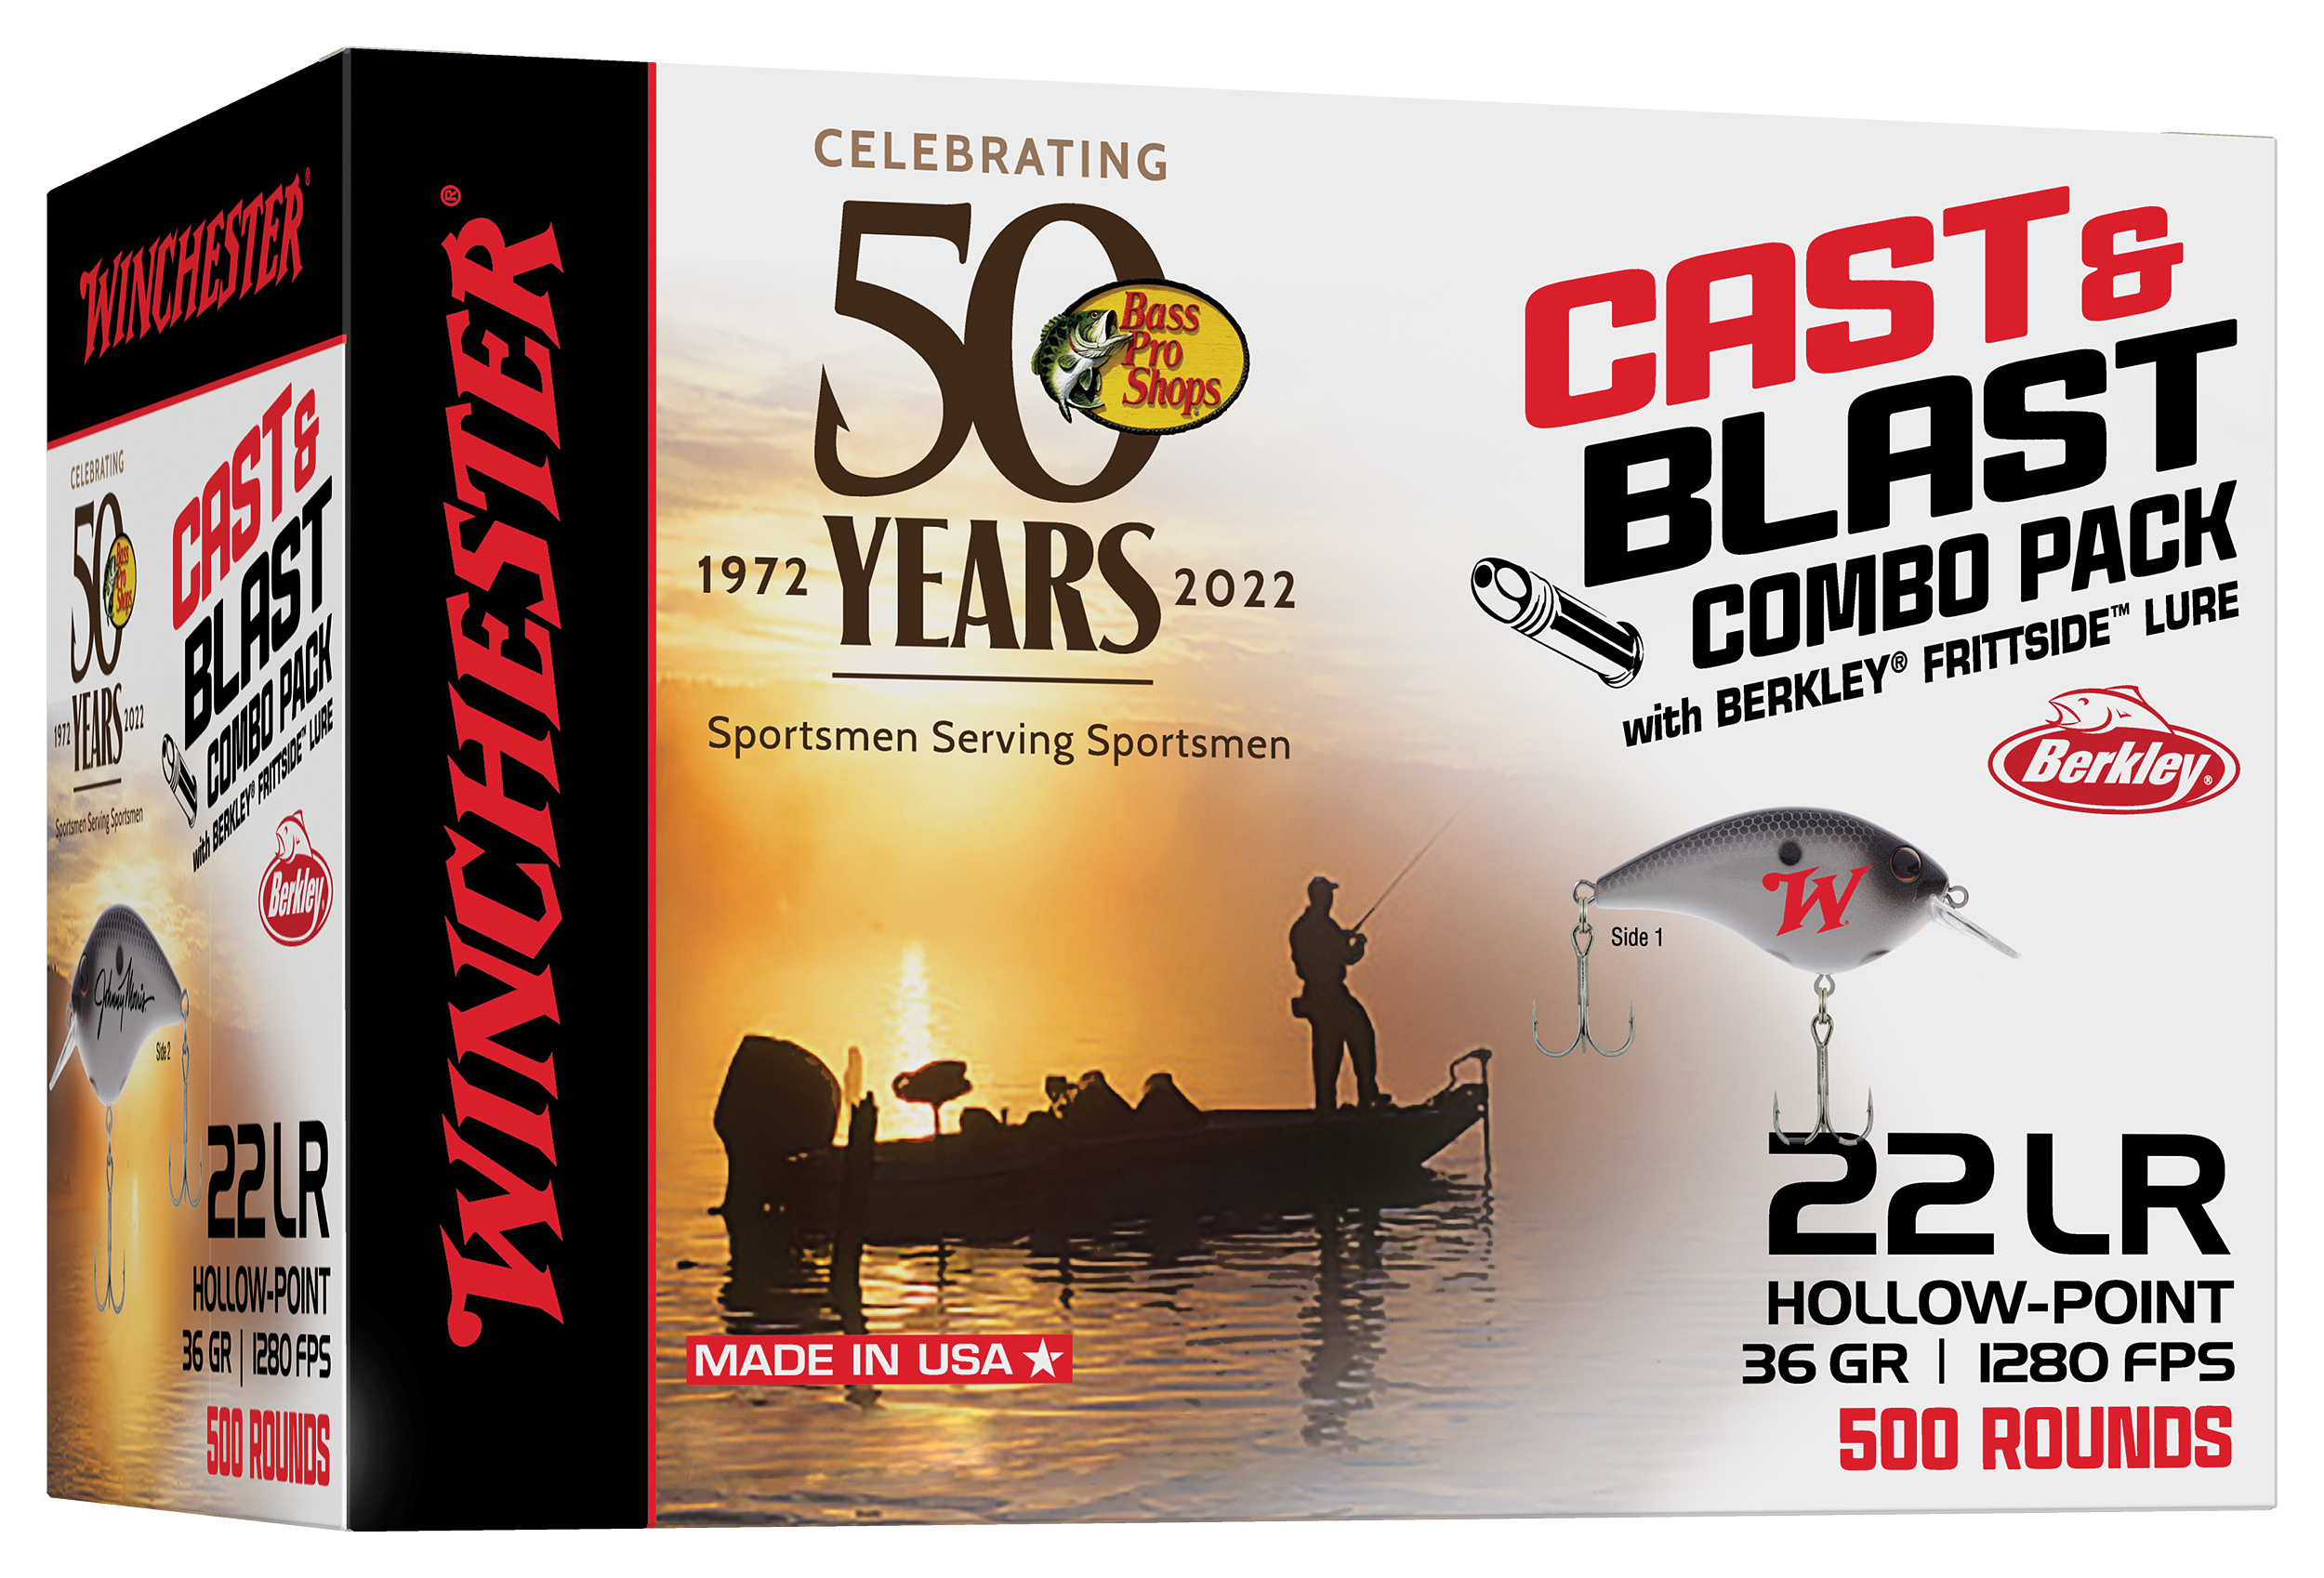 Winchester Bass Pro Shops 50th Anniversary CAST & BLAST 22 LR Ammo and Berkley Frittside Fishing Lure Combo